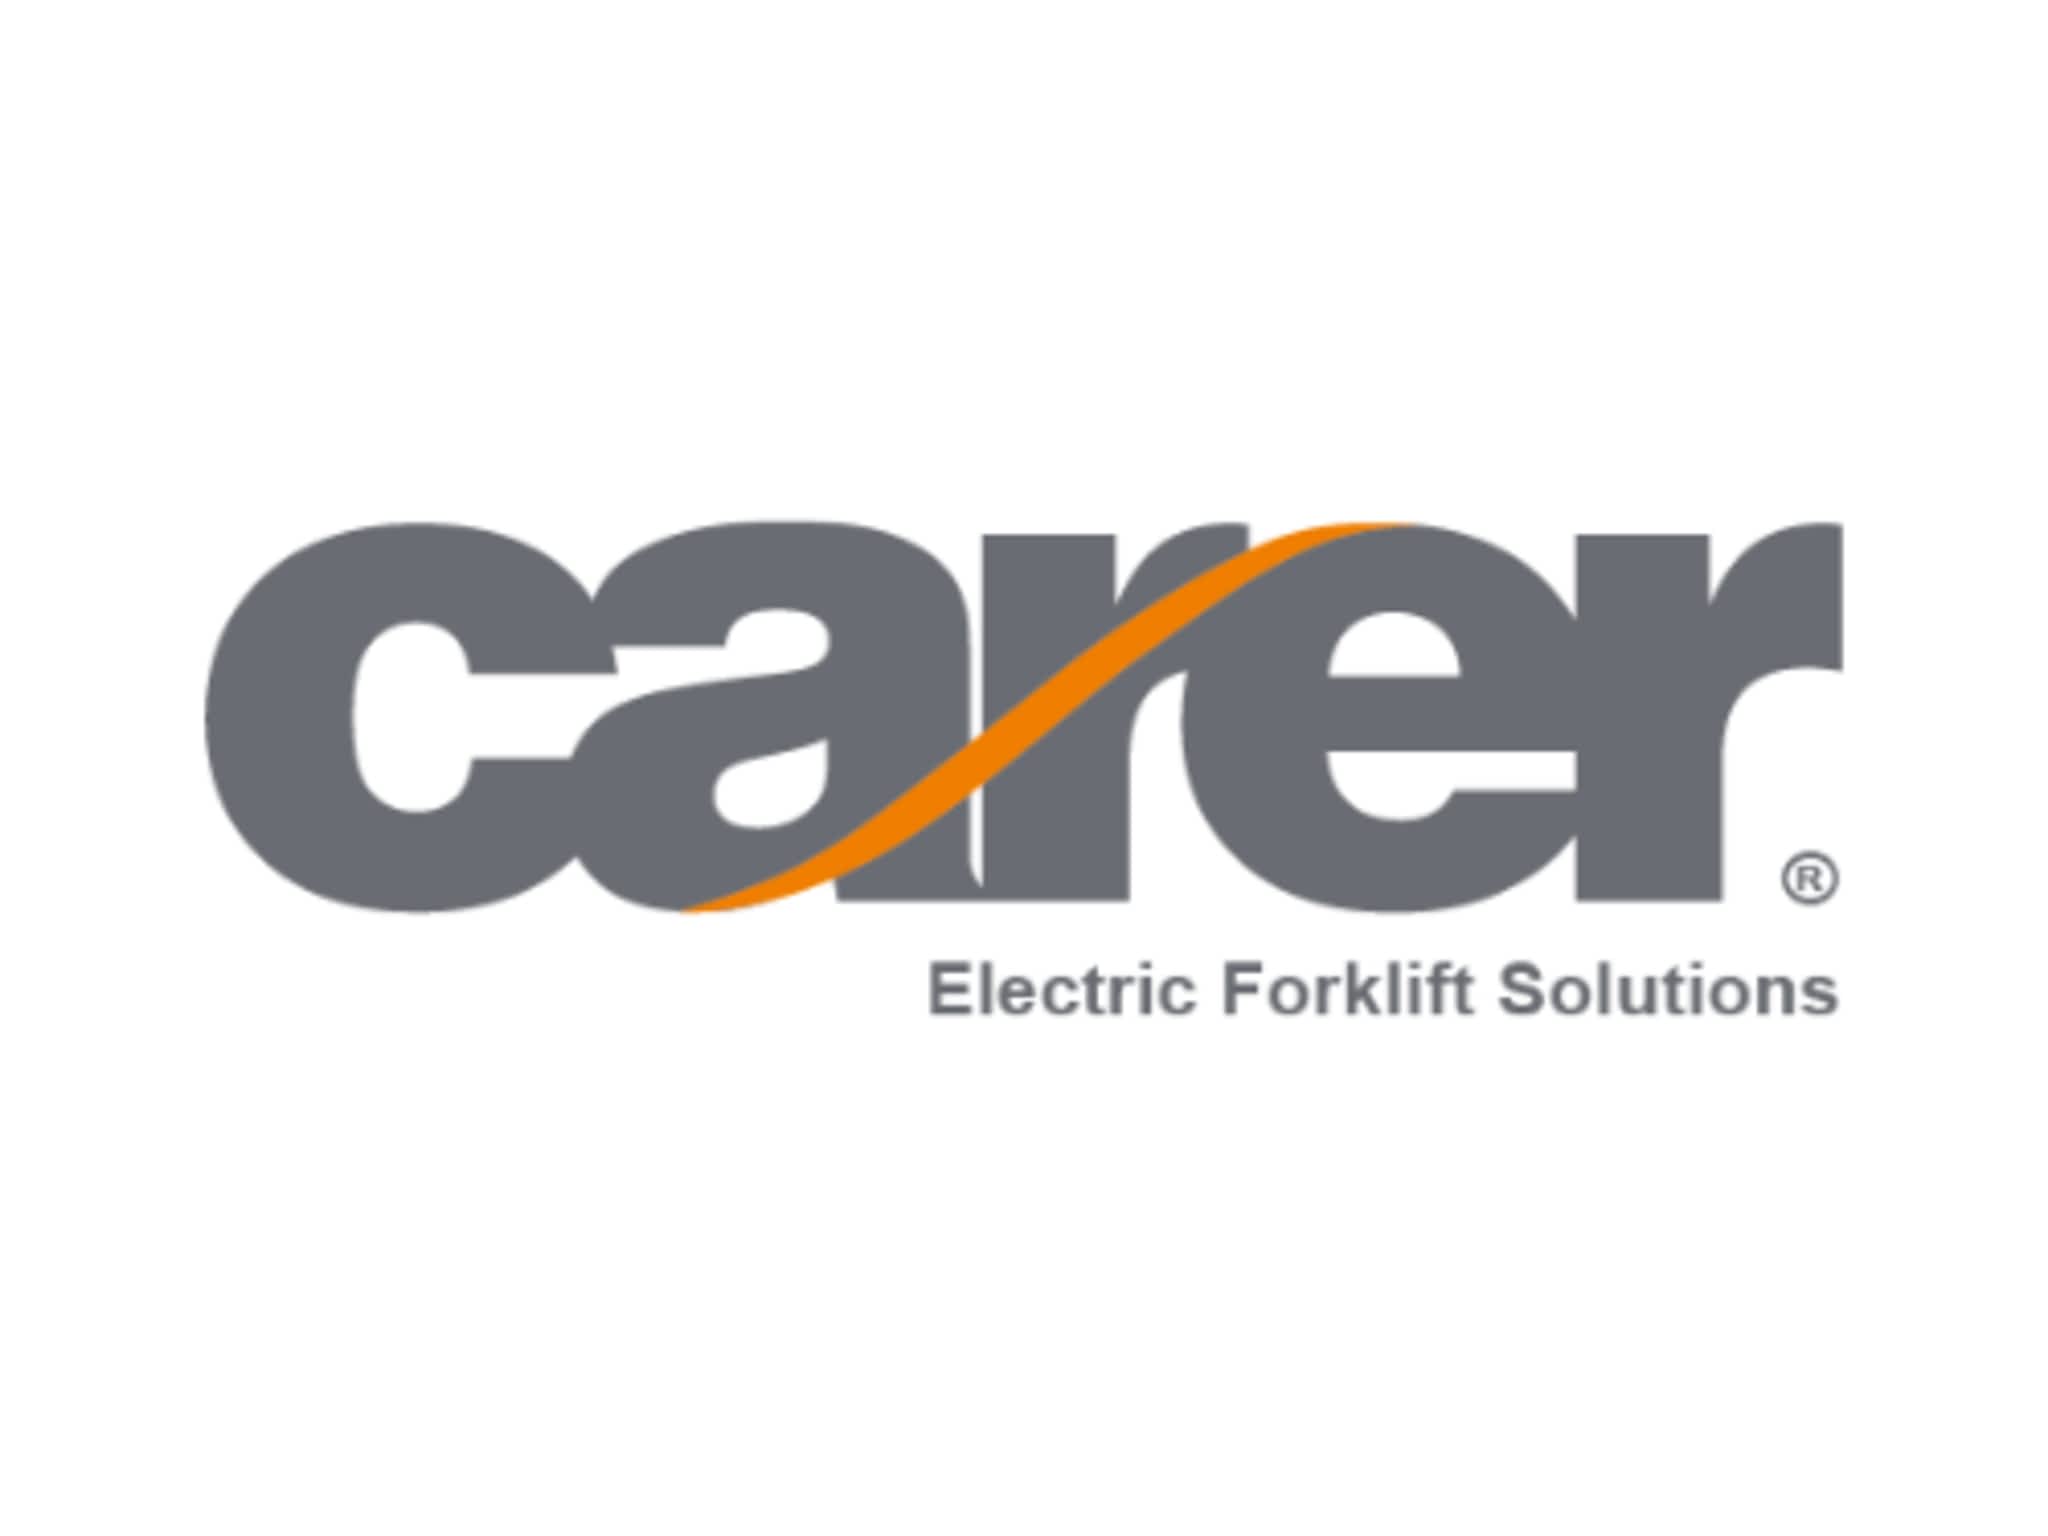 photo Carer Electric Forklift Solutions